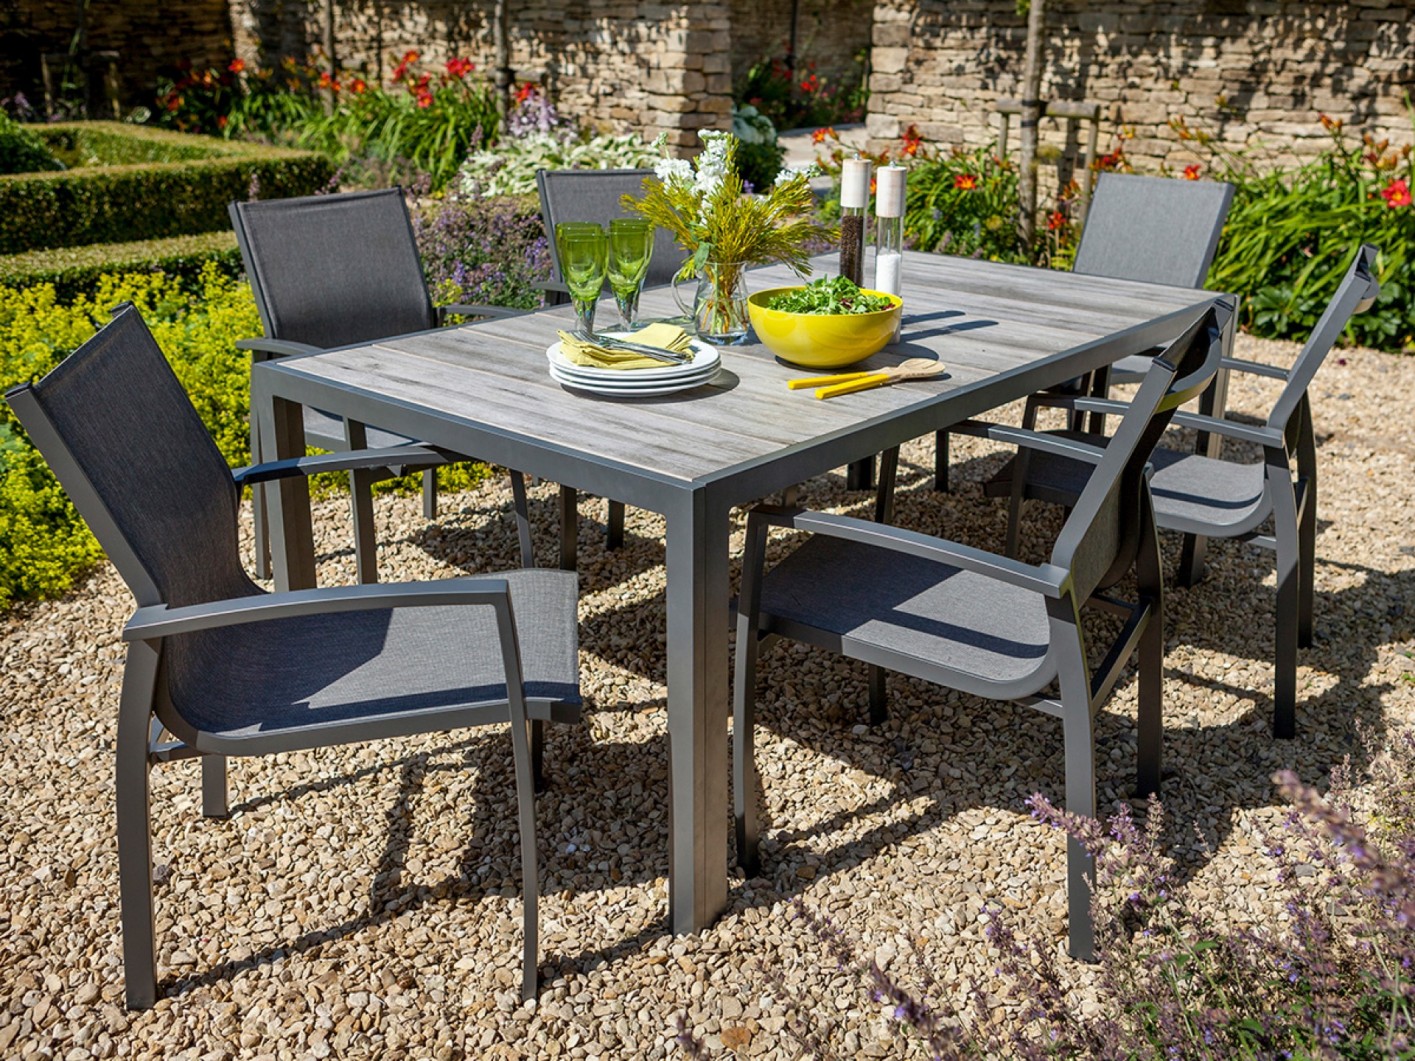  aluminium garden furniture sets ireland